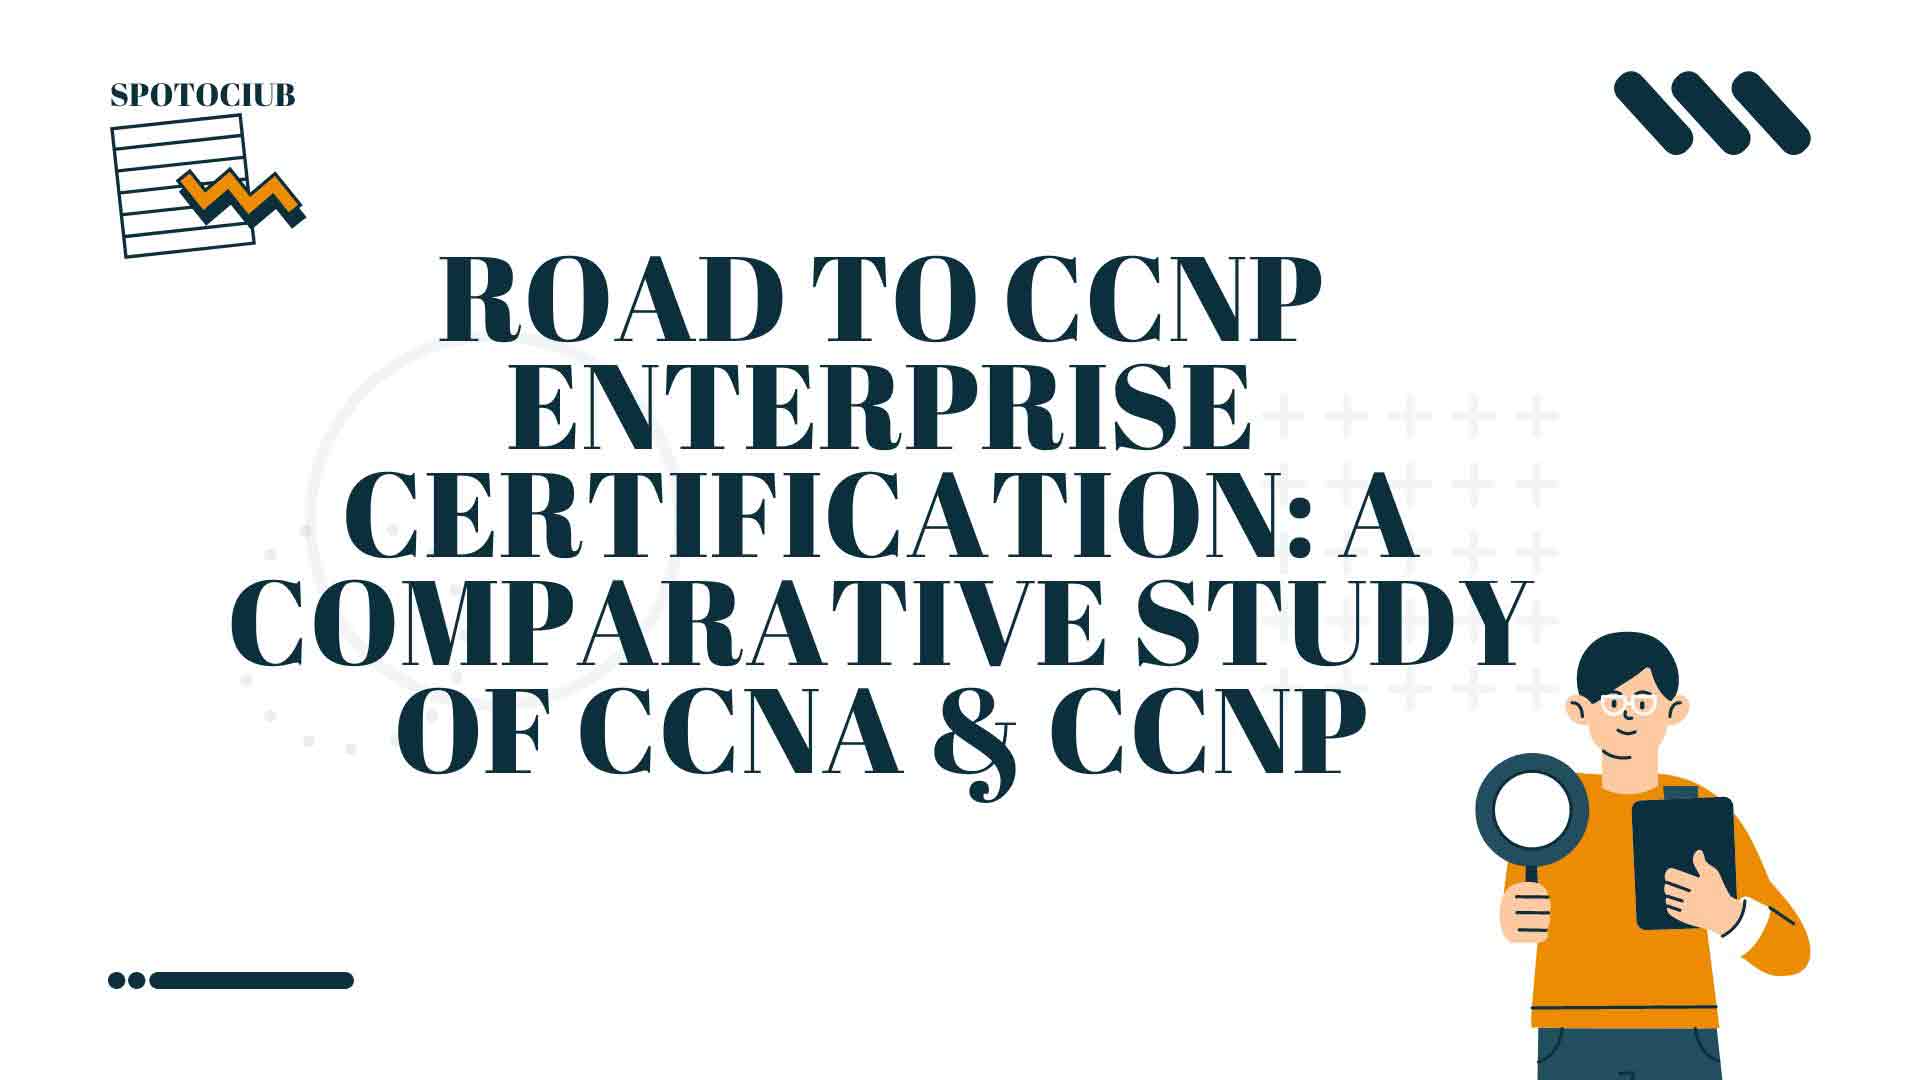 Comparative Study of CCNA & CCNP